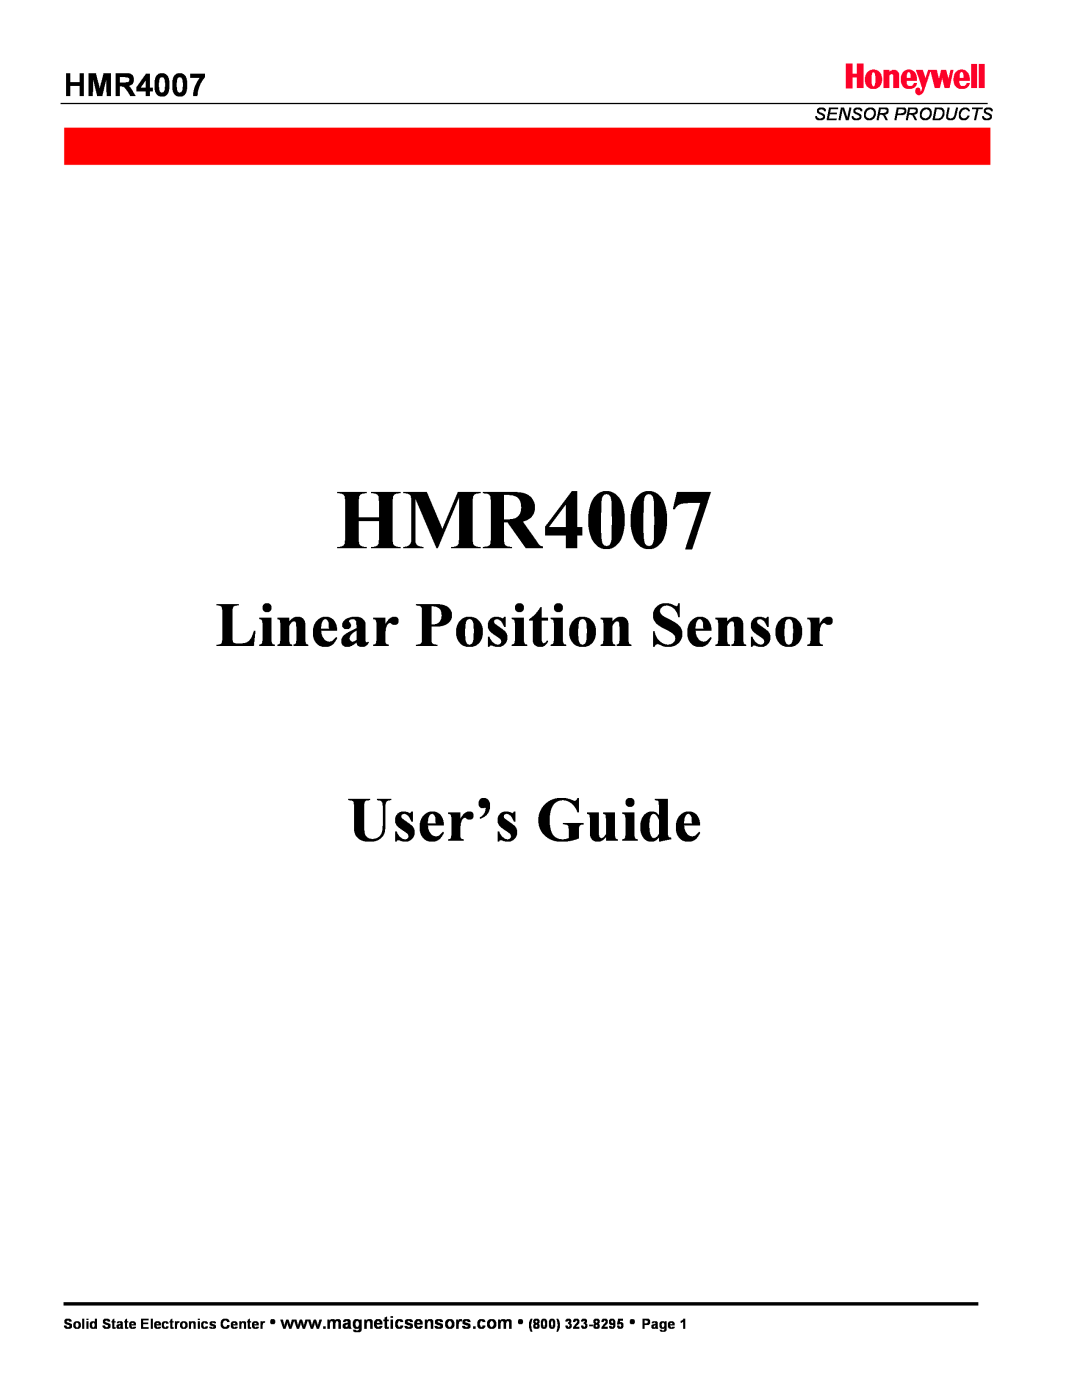 Honeywell HMR4007 manual Sensor Products, Linear Position Sensor User’s Guide 